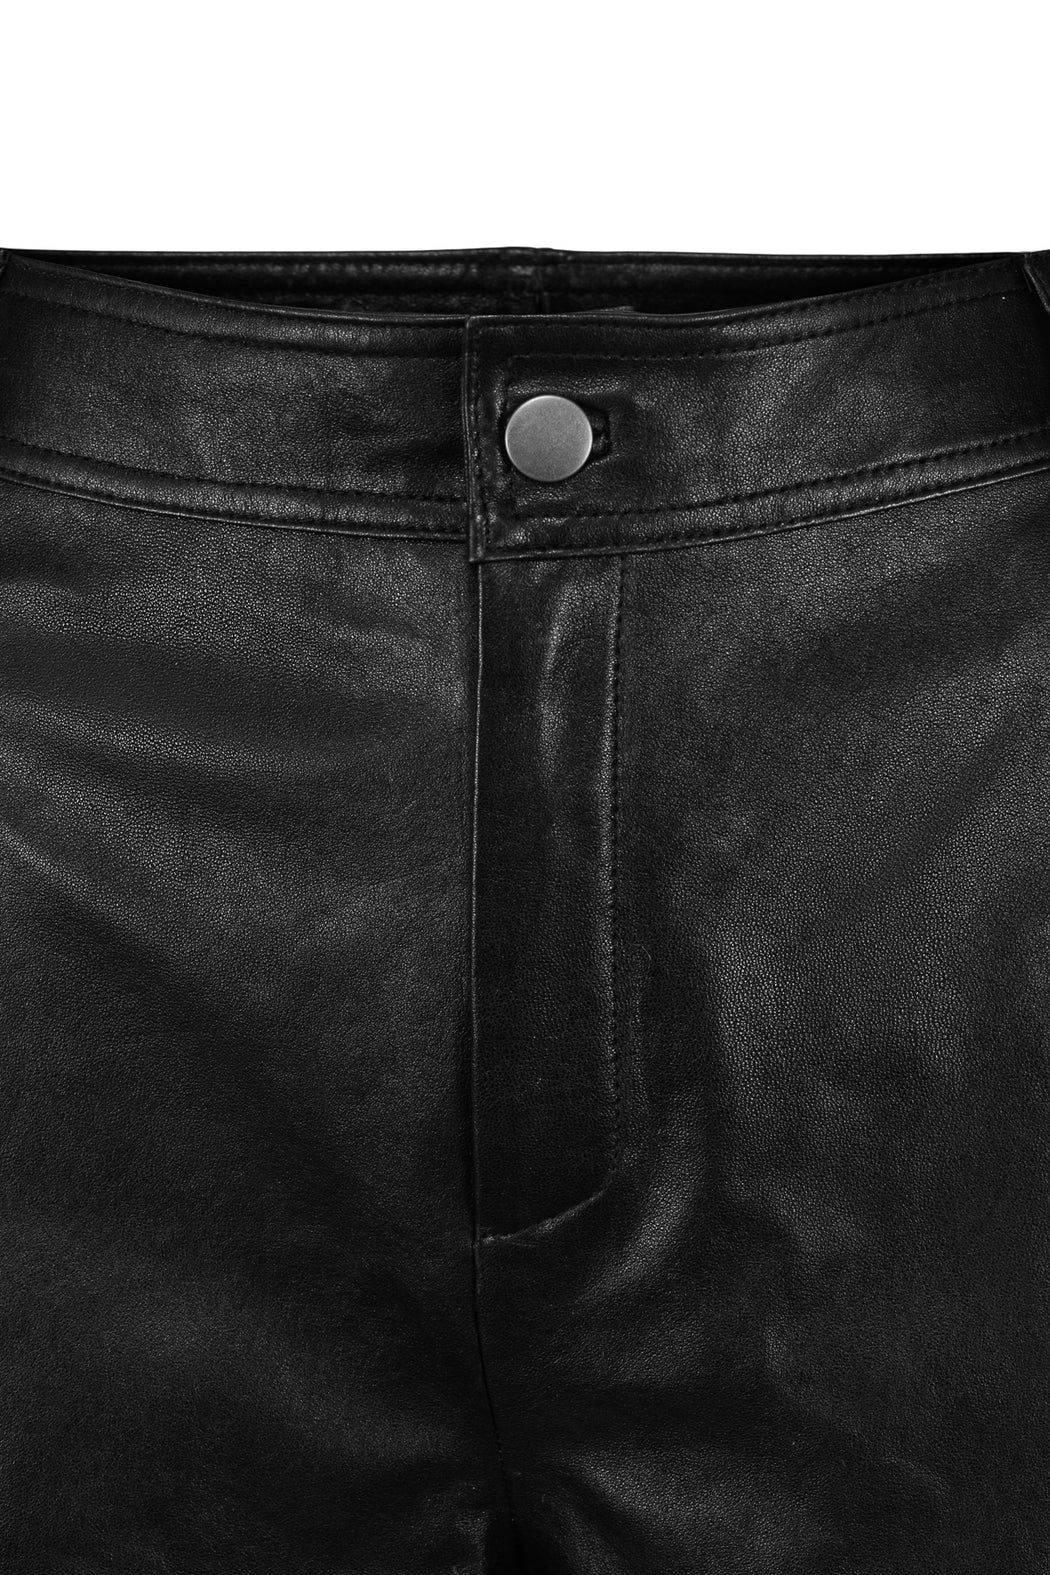 Envelope1976 Brava shorts - Leather Shorts Black